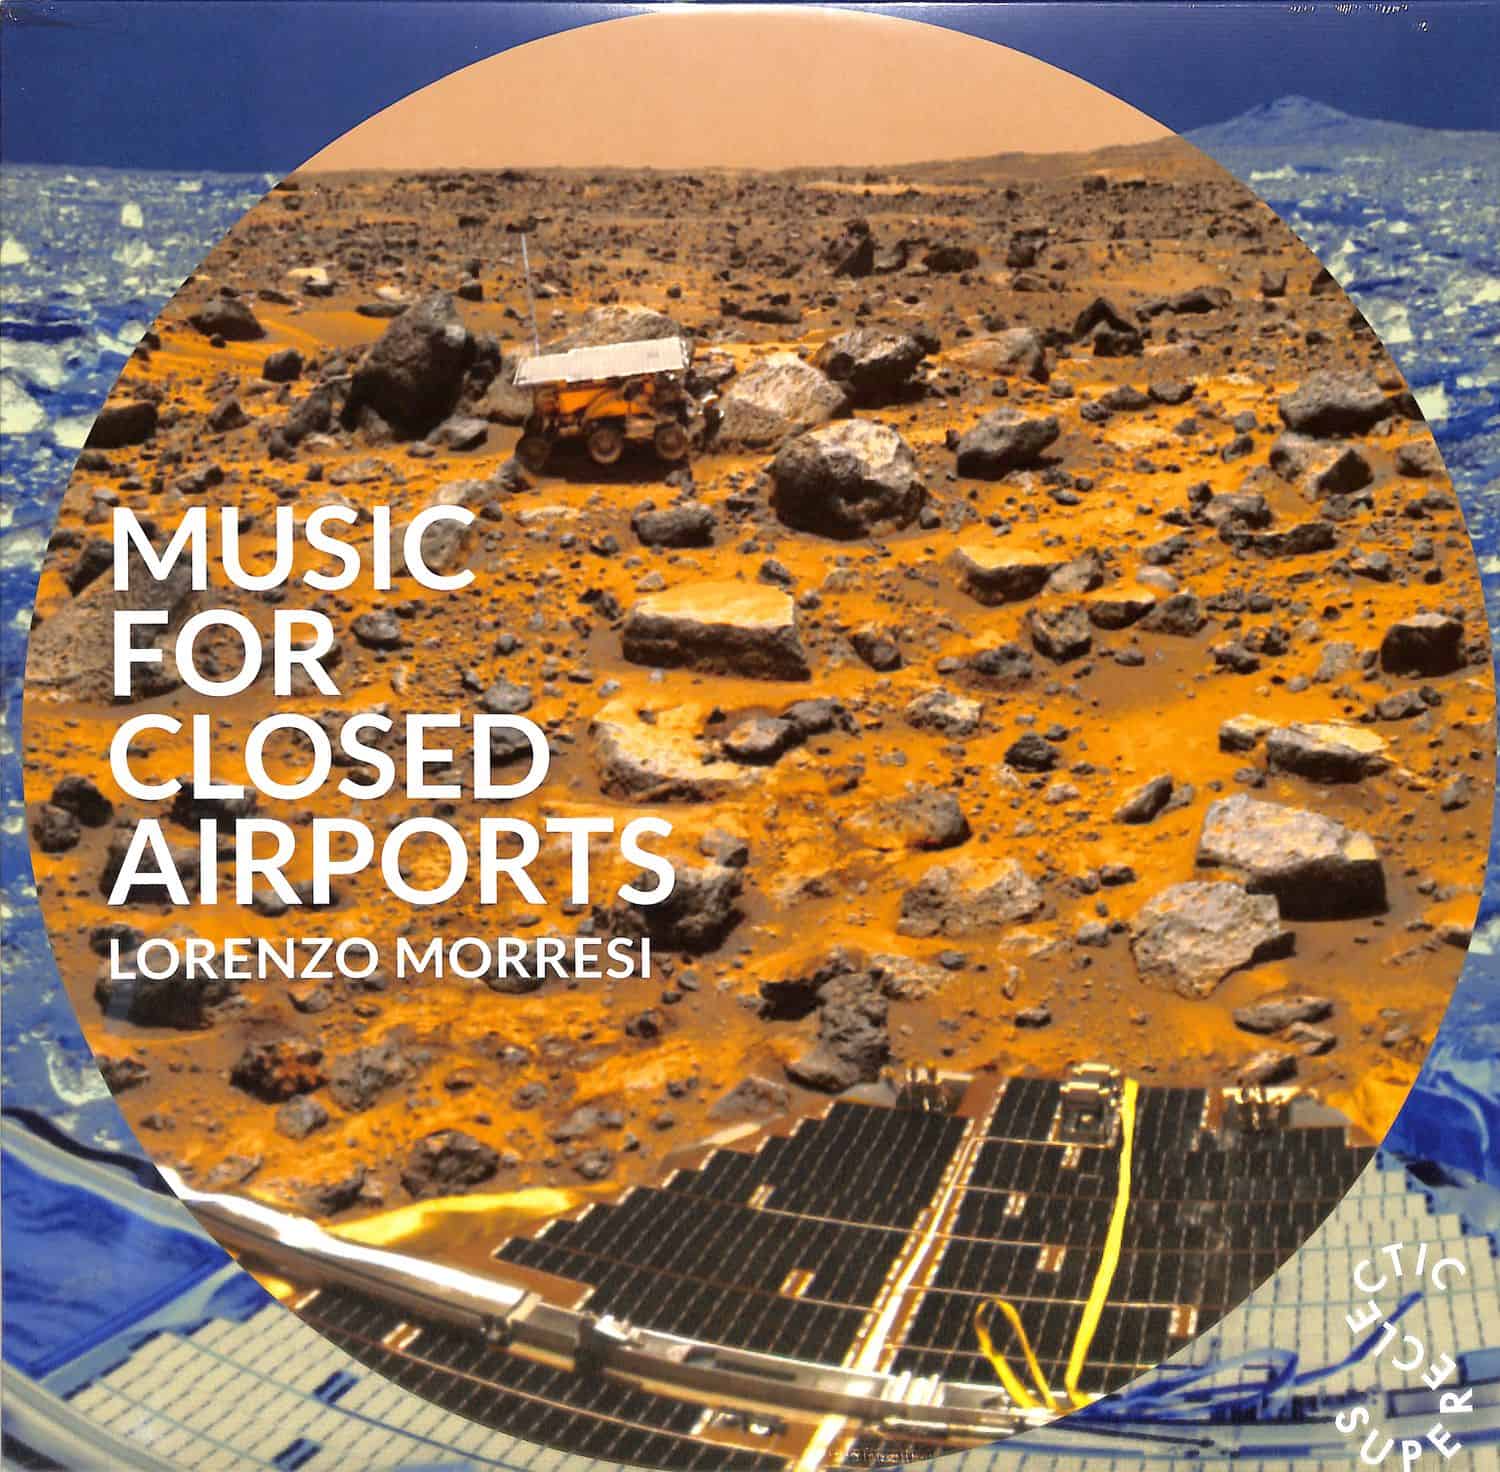 Lorenzo Morresi - MUSIC FOR CLOSED AIRPORTS 